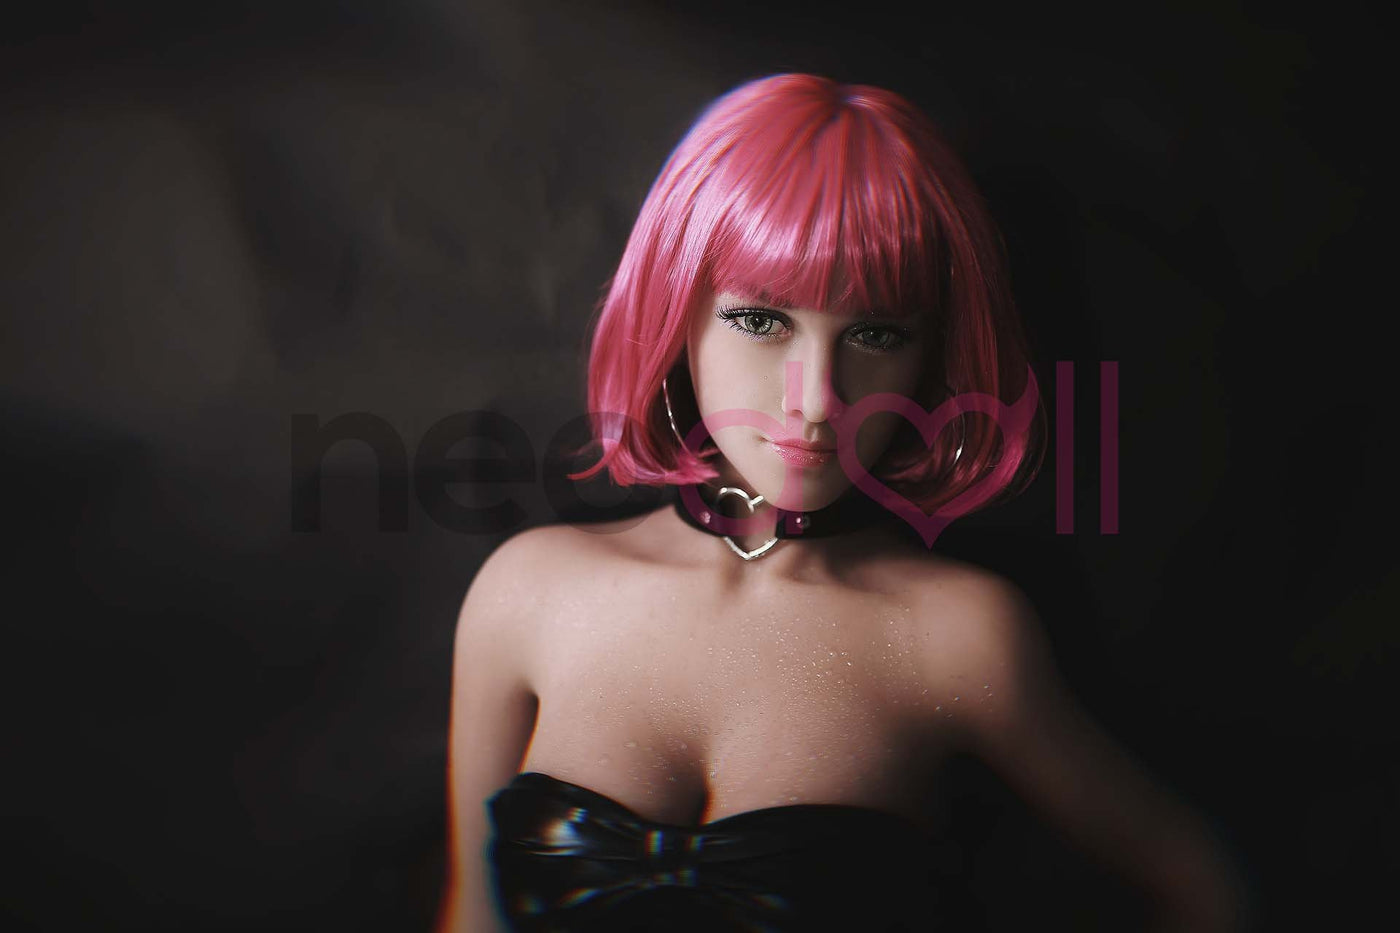 Neodoll Sugar Babe - Pag - Realistic Sex Doll - Gel Breast - Uterus - 150cm - Tan